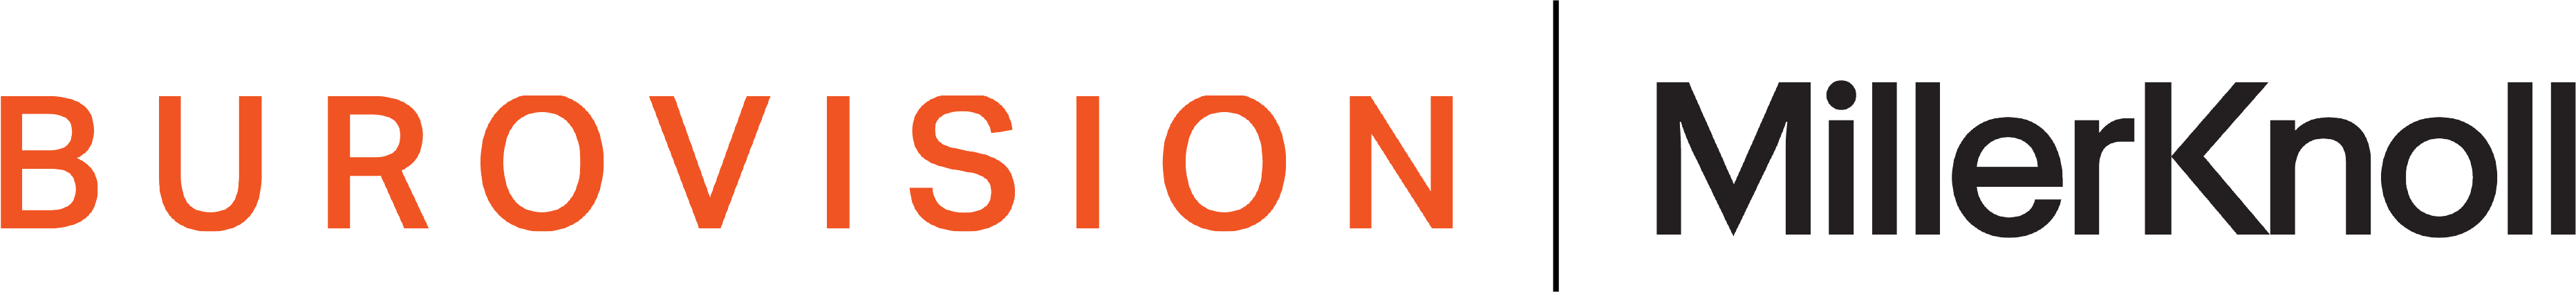 logo-burovision-millerknoll